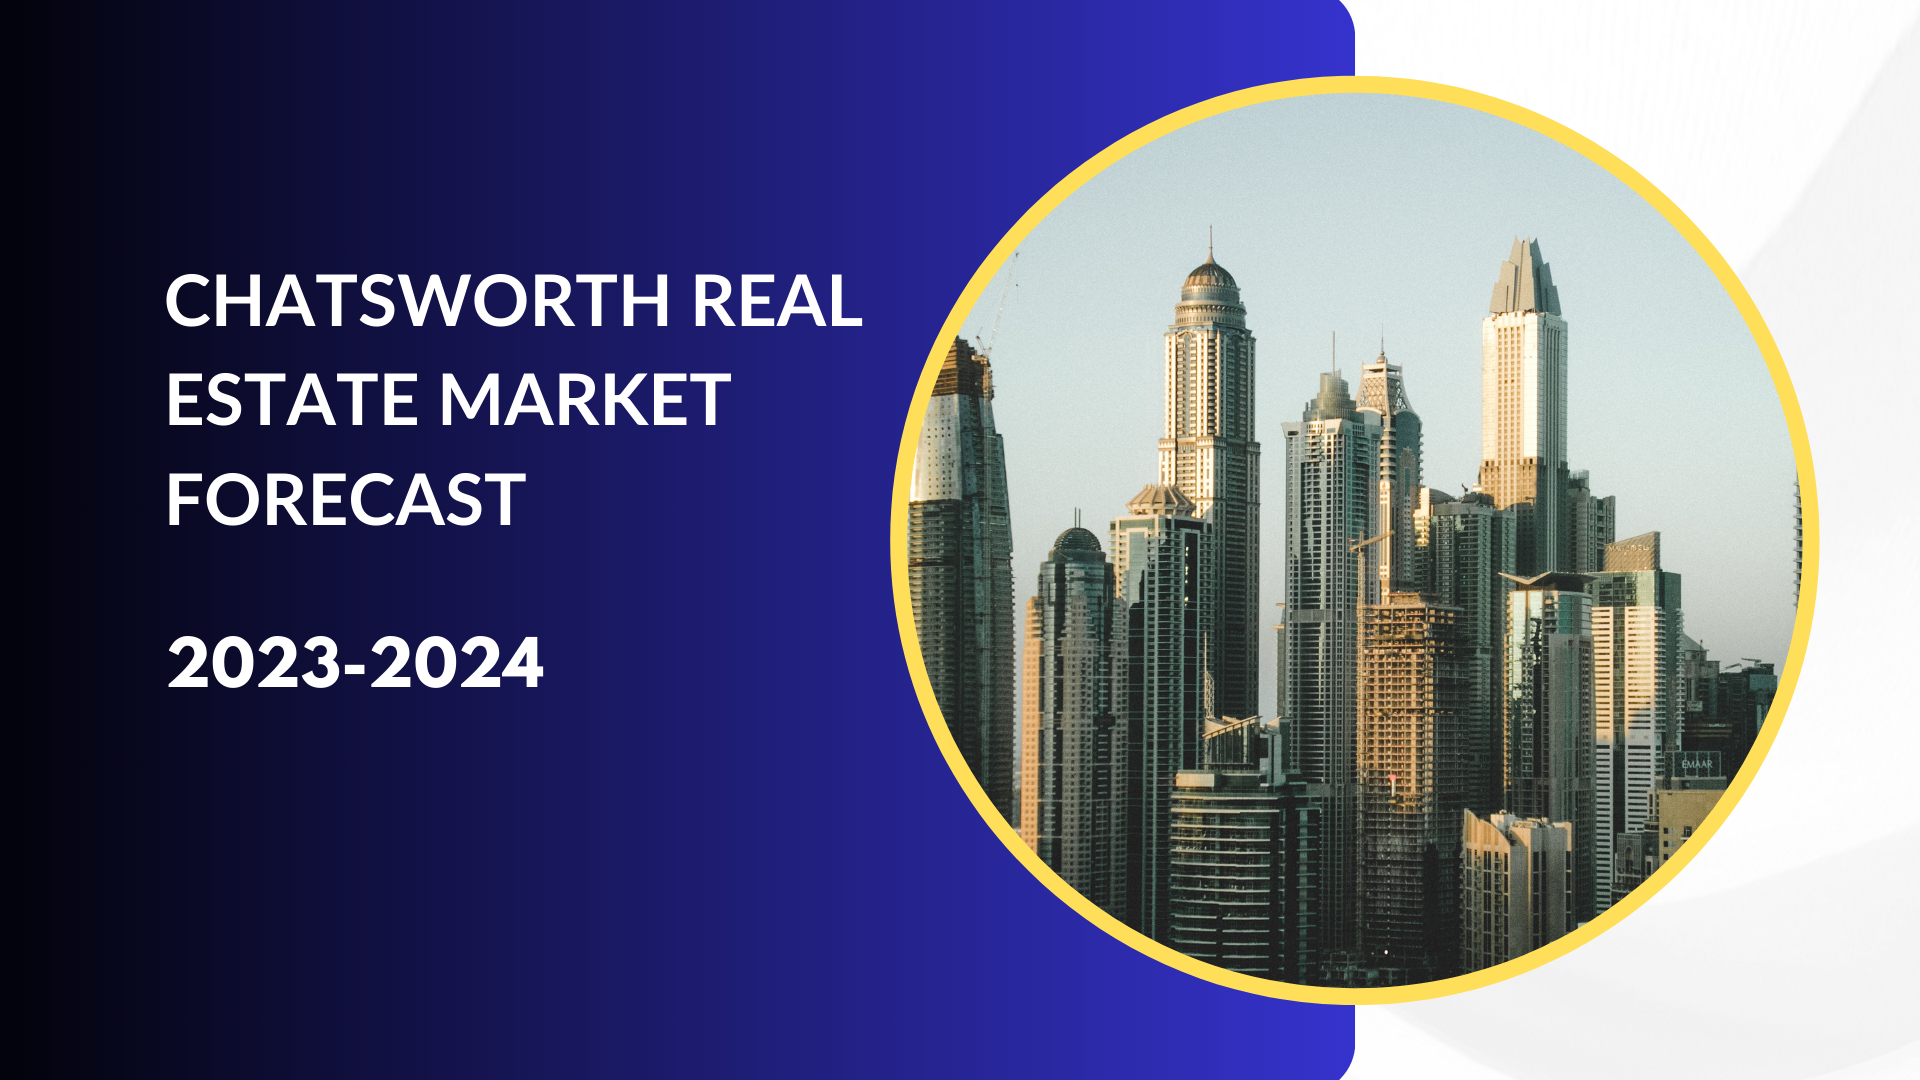 Chatsworth Real Estate Market Forecast: 2023-2024